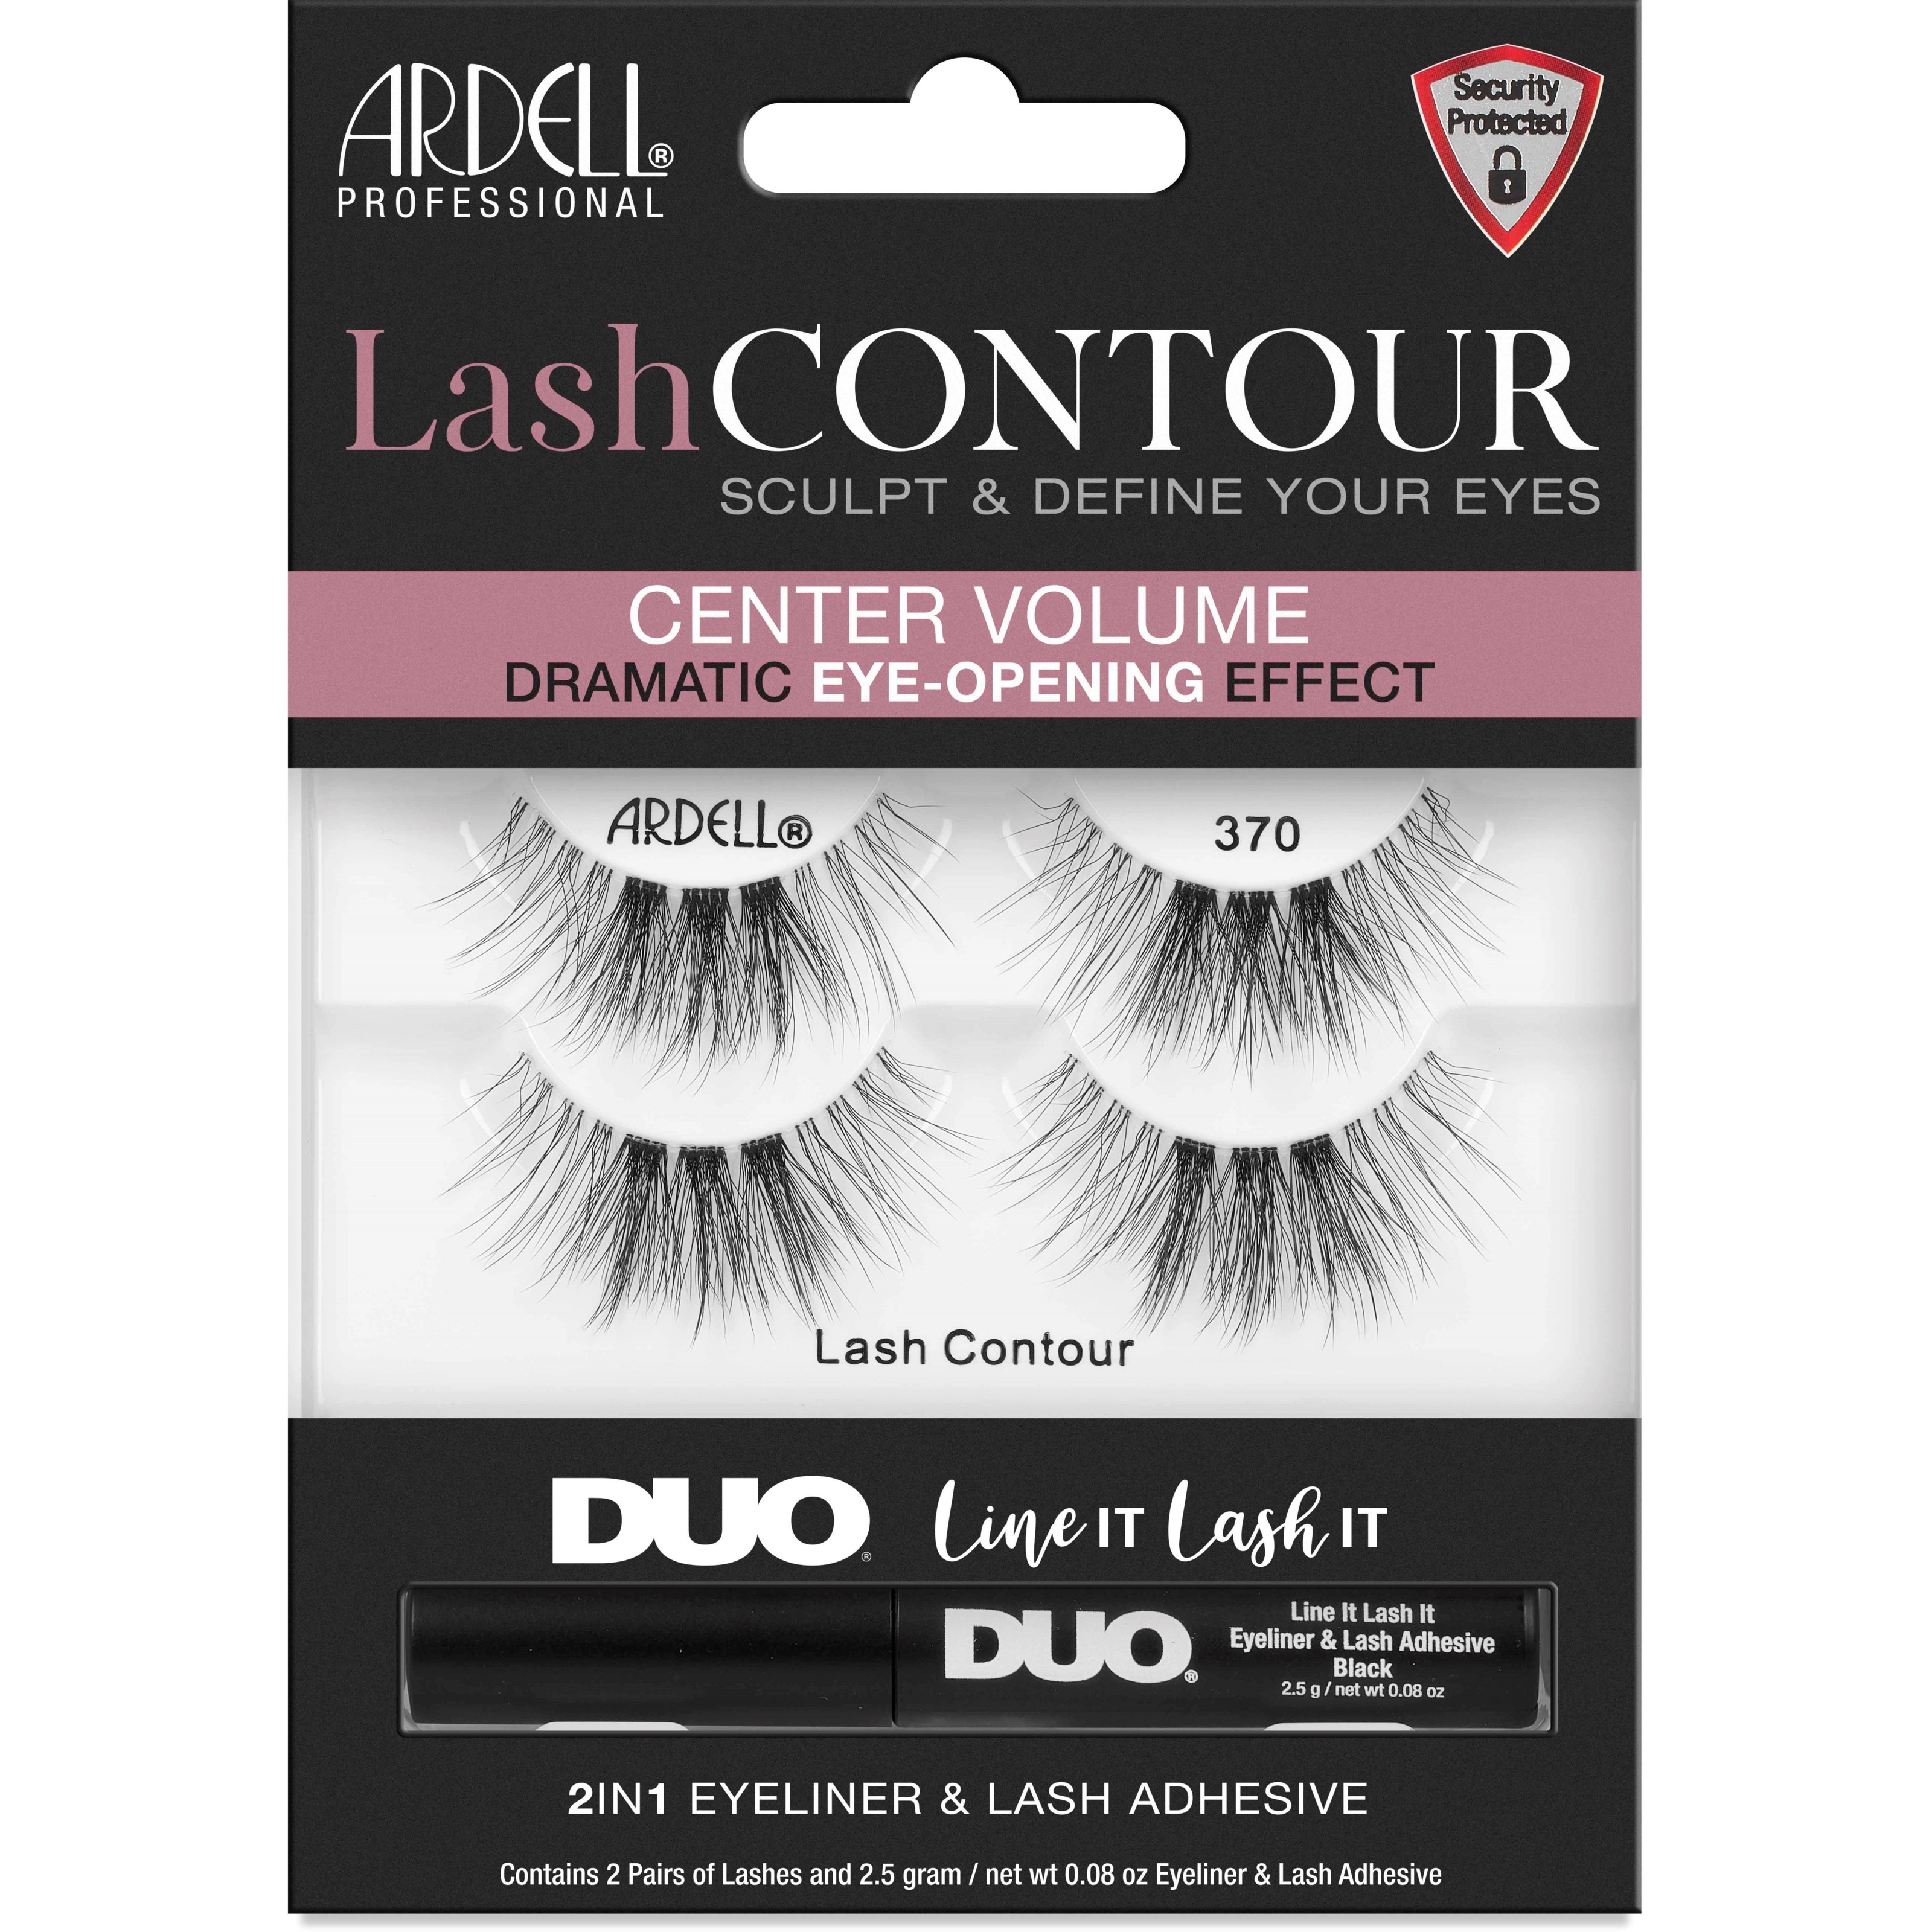 Ardell Lash Contour Opening Center Volume 370